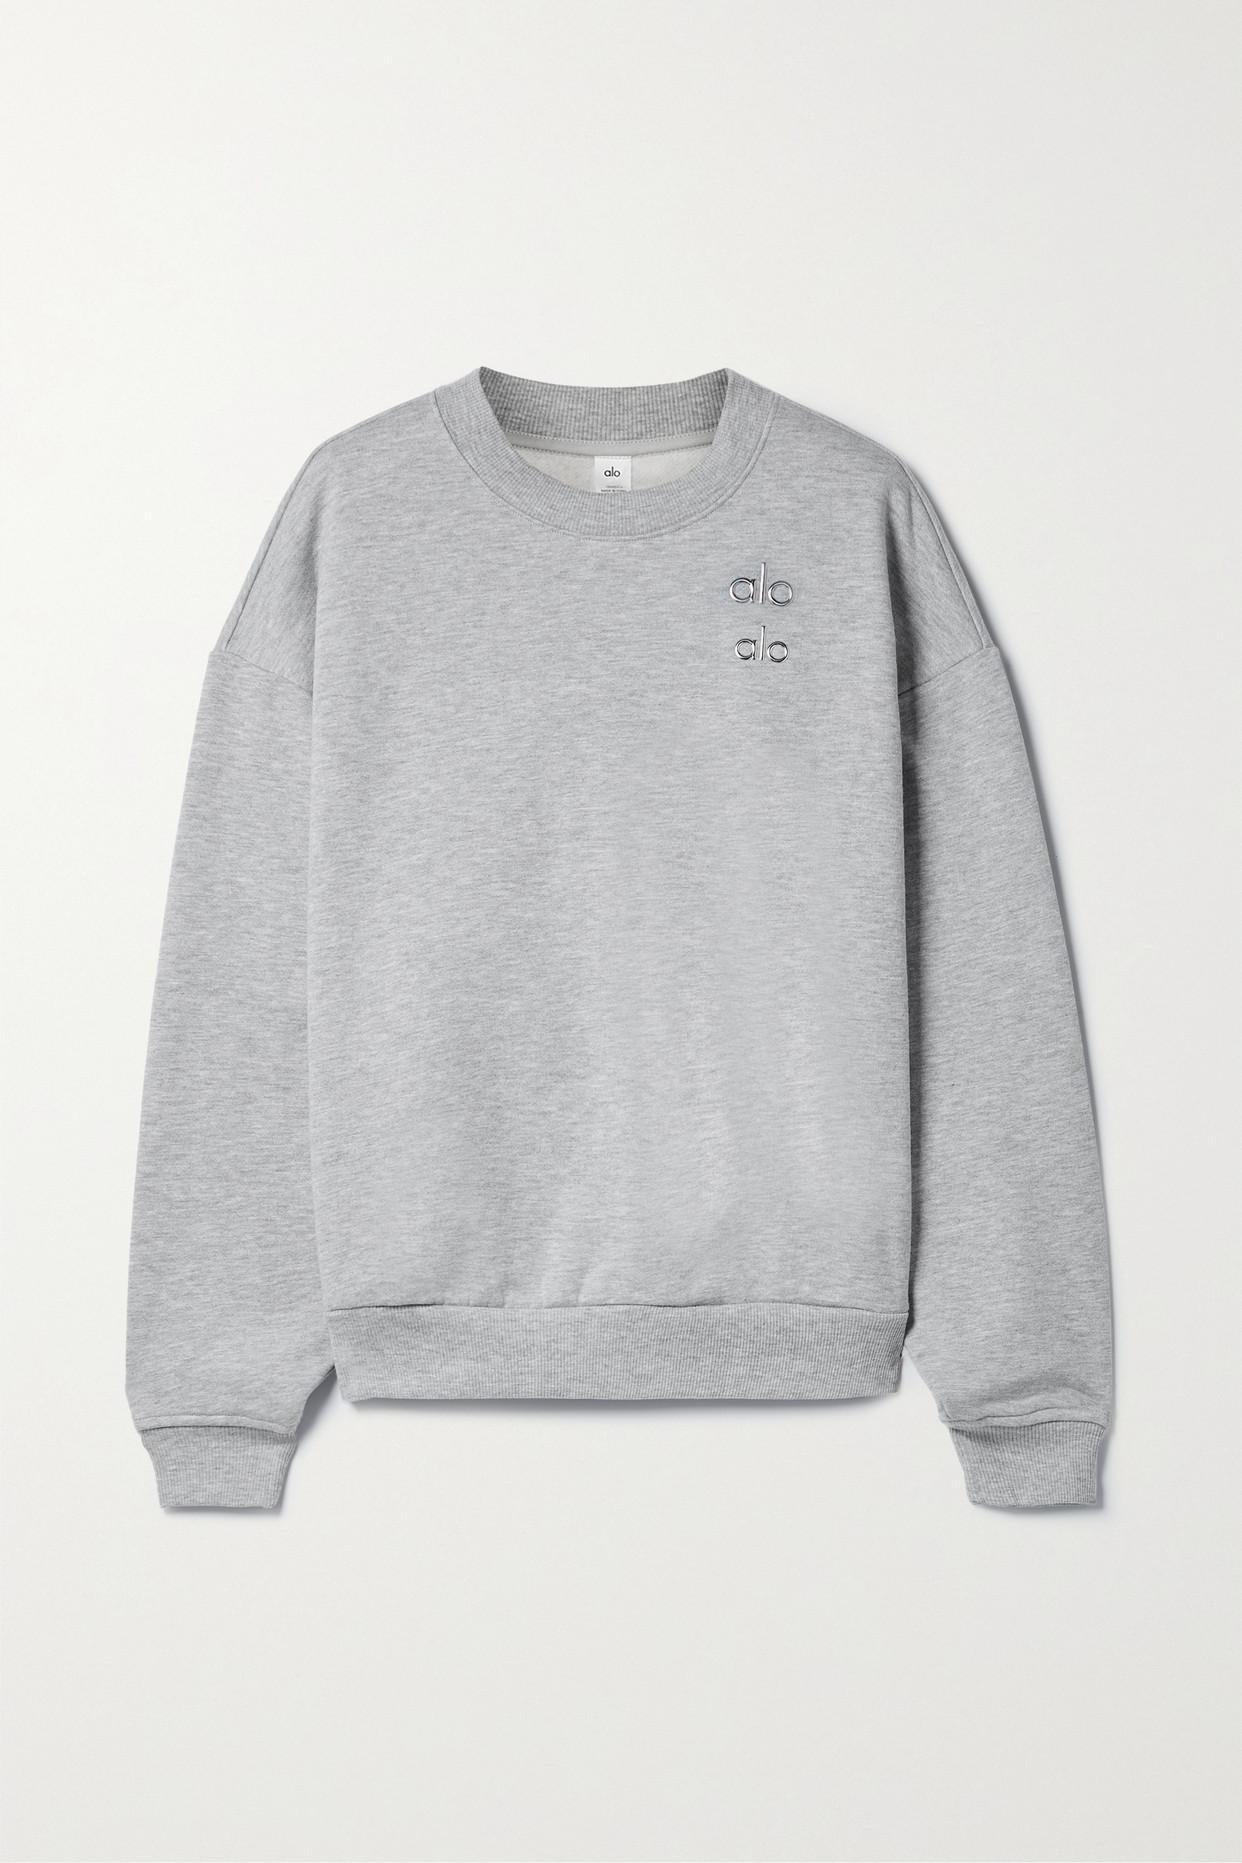 Alo Yoga Accolade Cotton-blend Jersey Sweatshirt in Grey